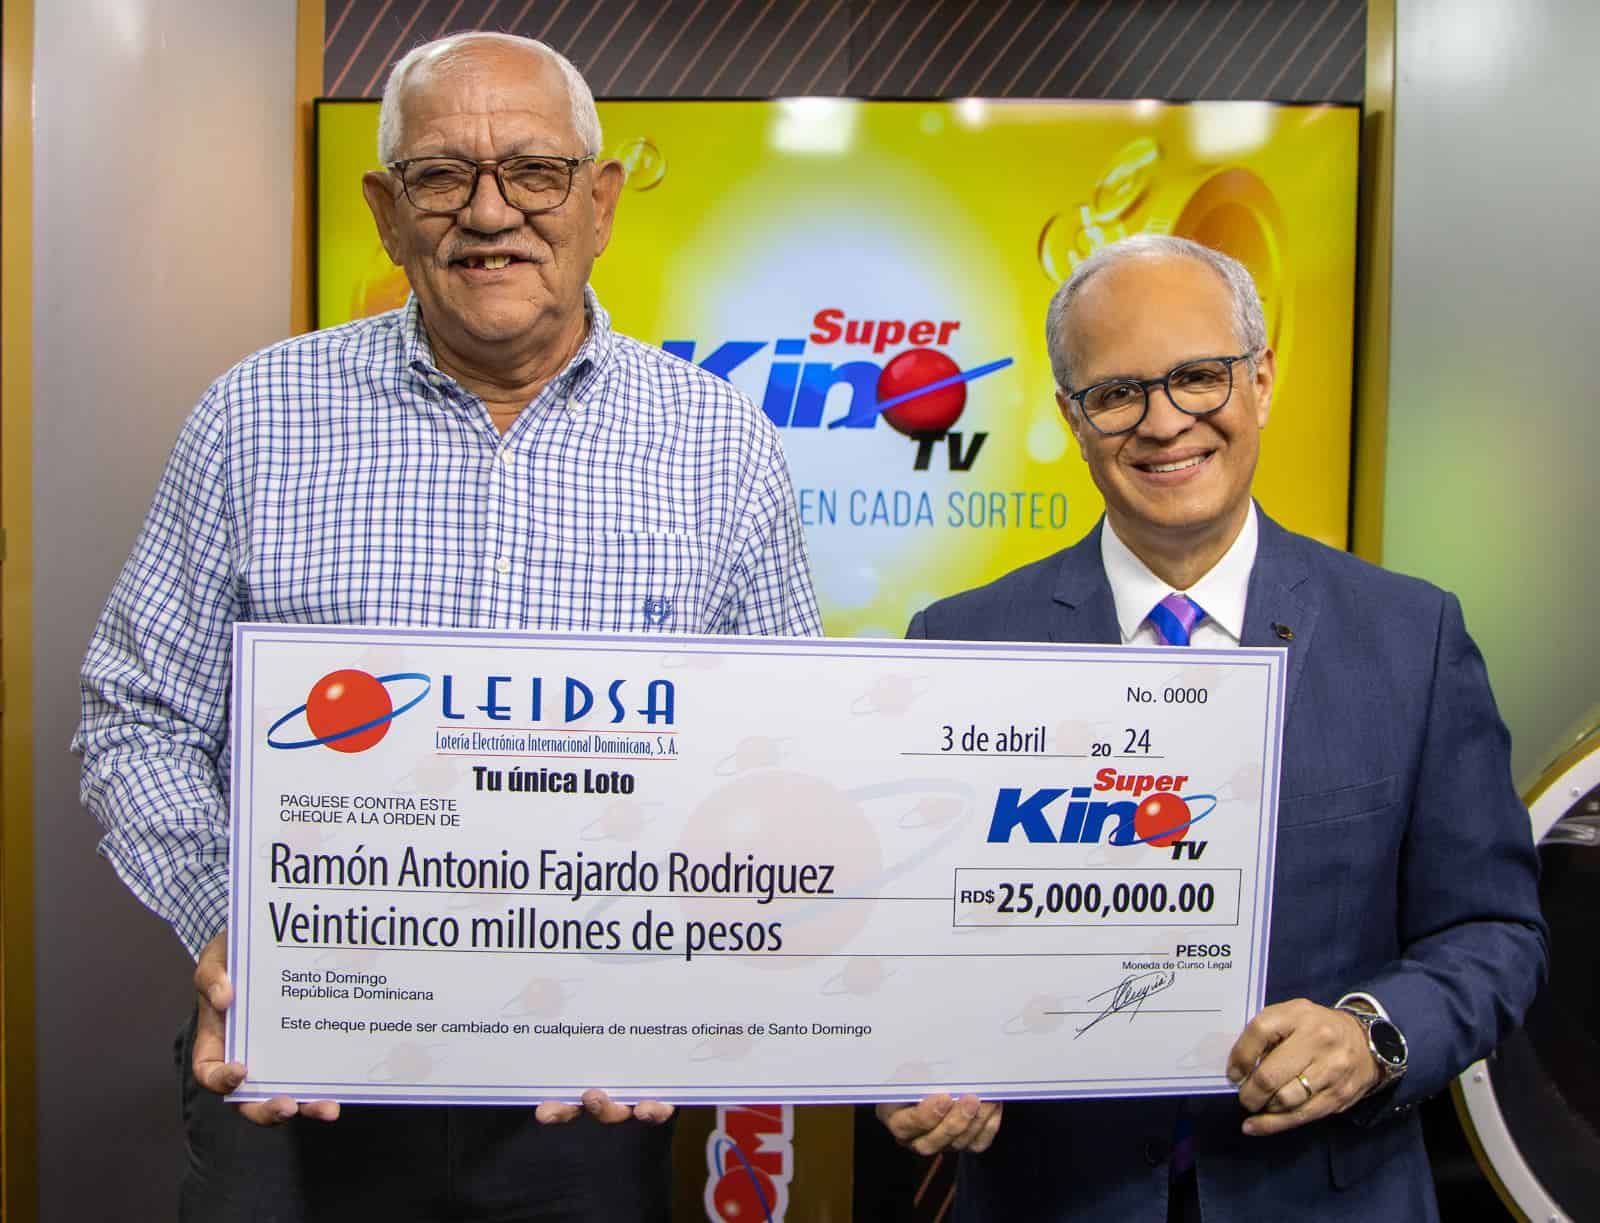 Leidsa entrega 25 millones a profesor ganador del Súper Kino TV